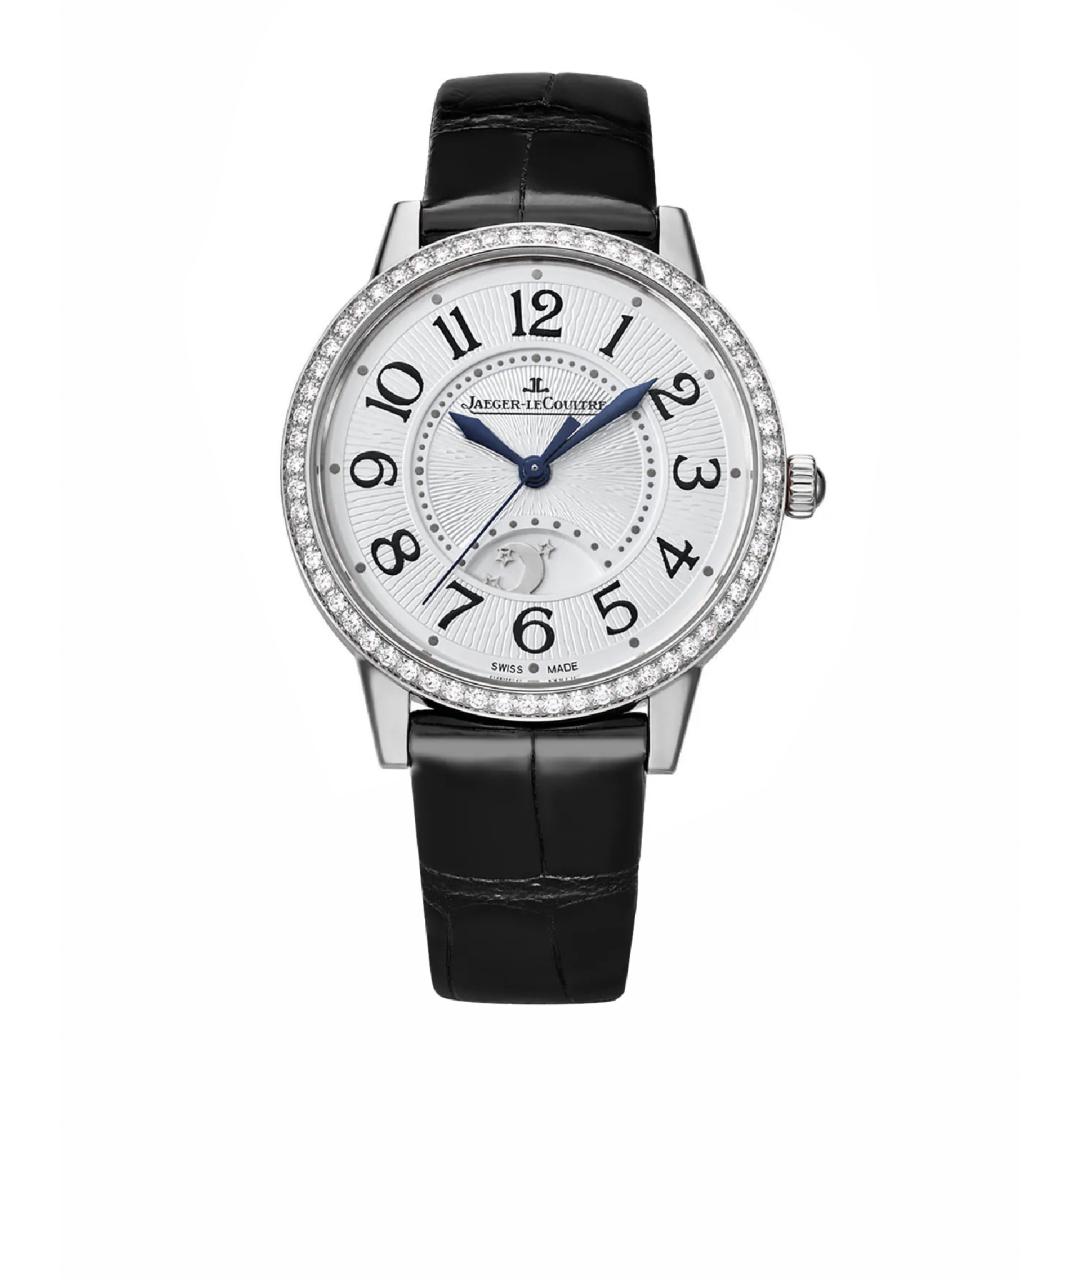 Jaeger LeCoultre Белые металлические часы, фото 1